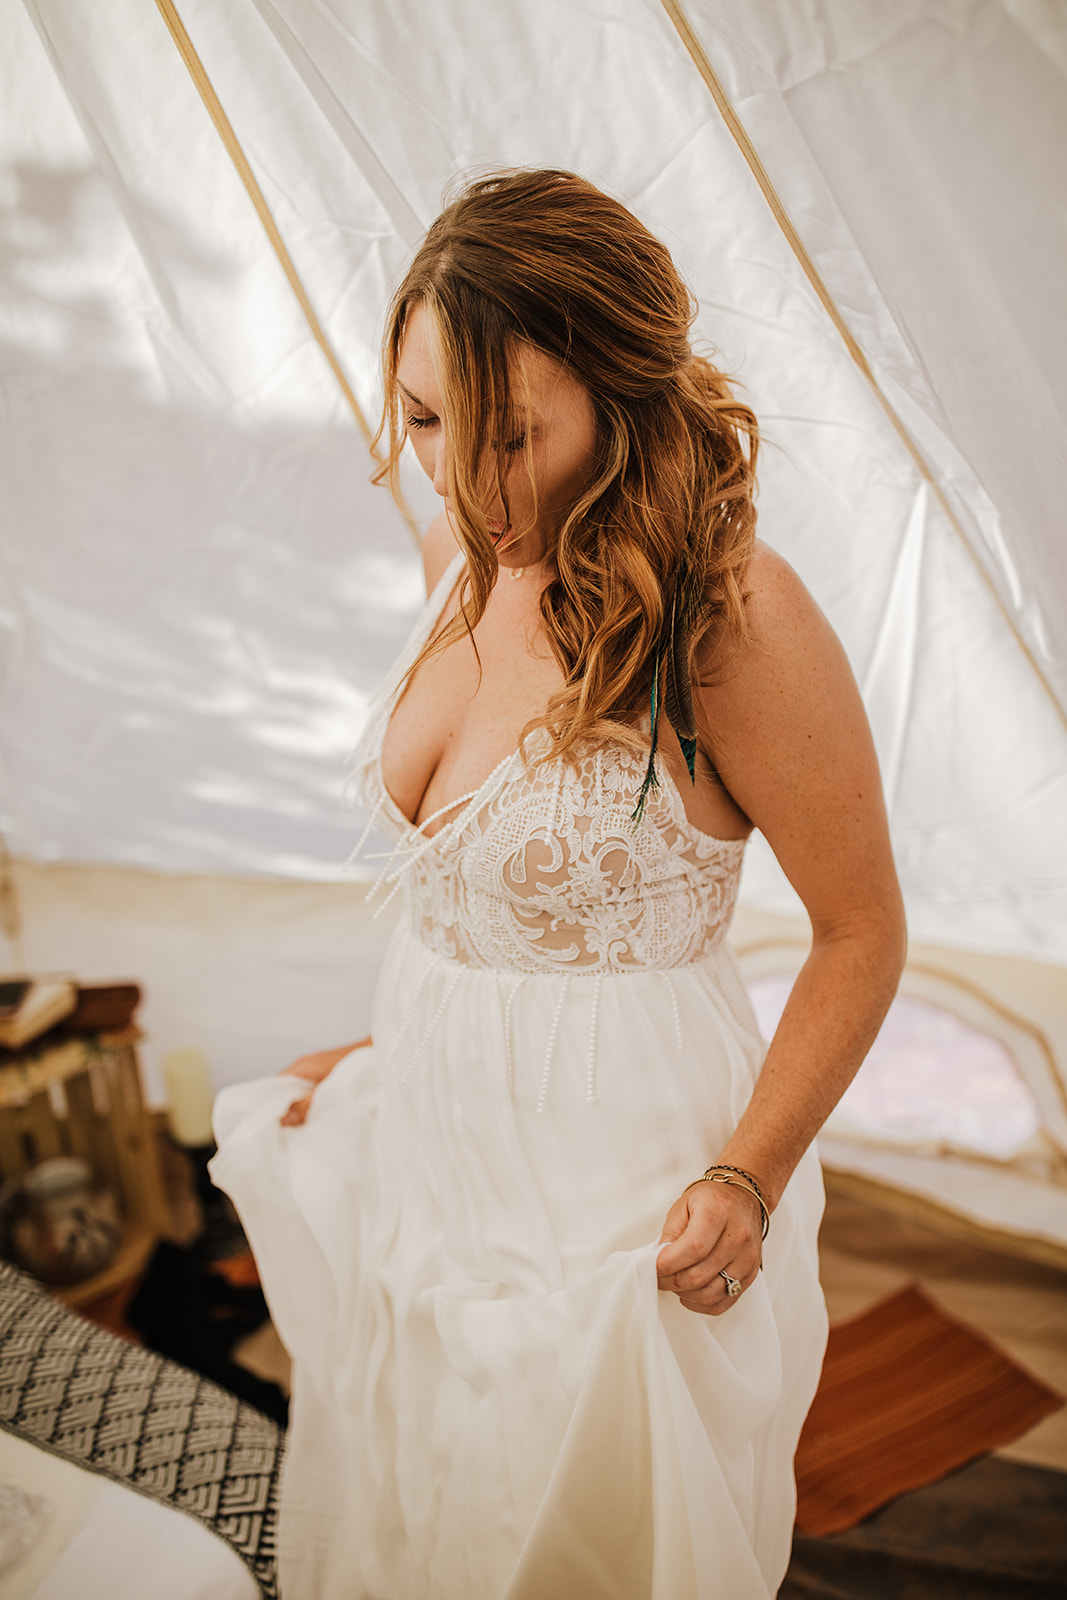 bride getting dressed for desert elopement in desert tent